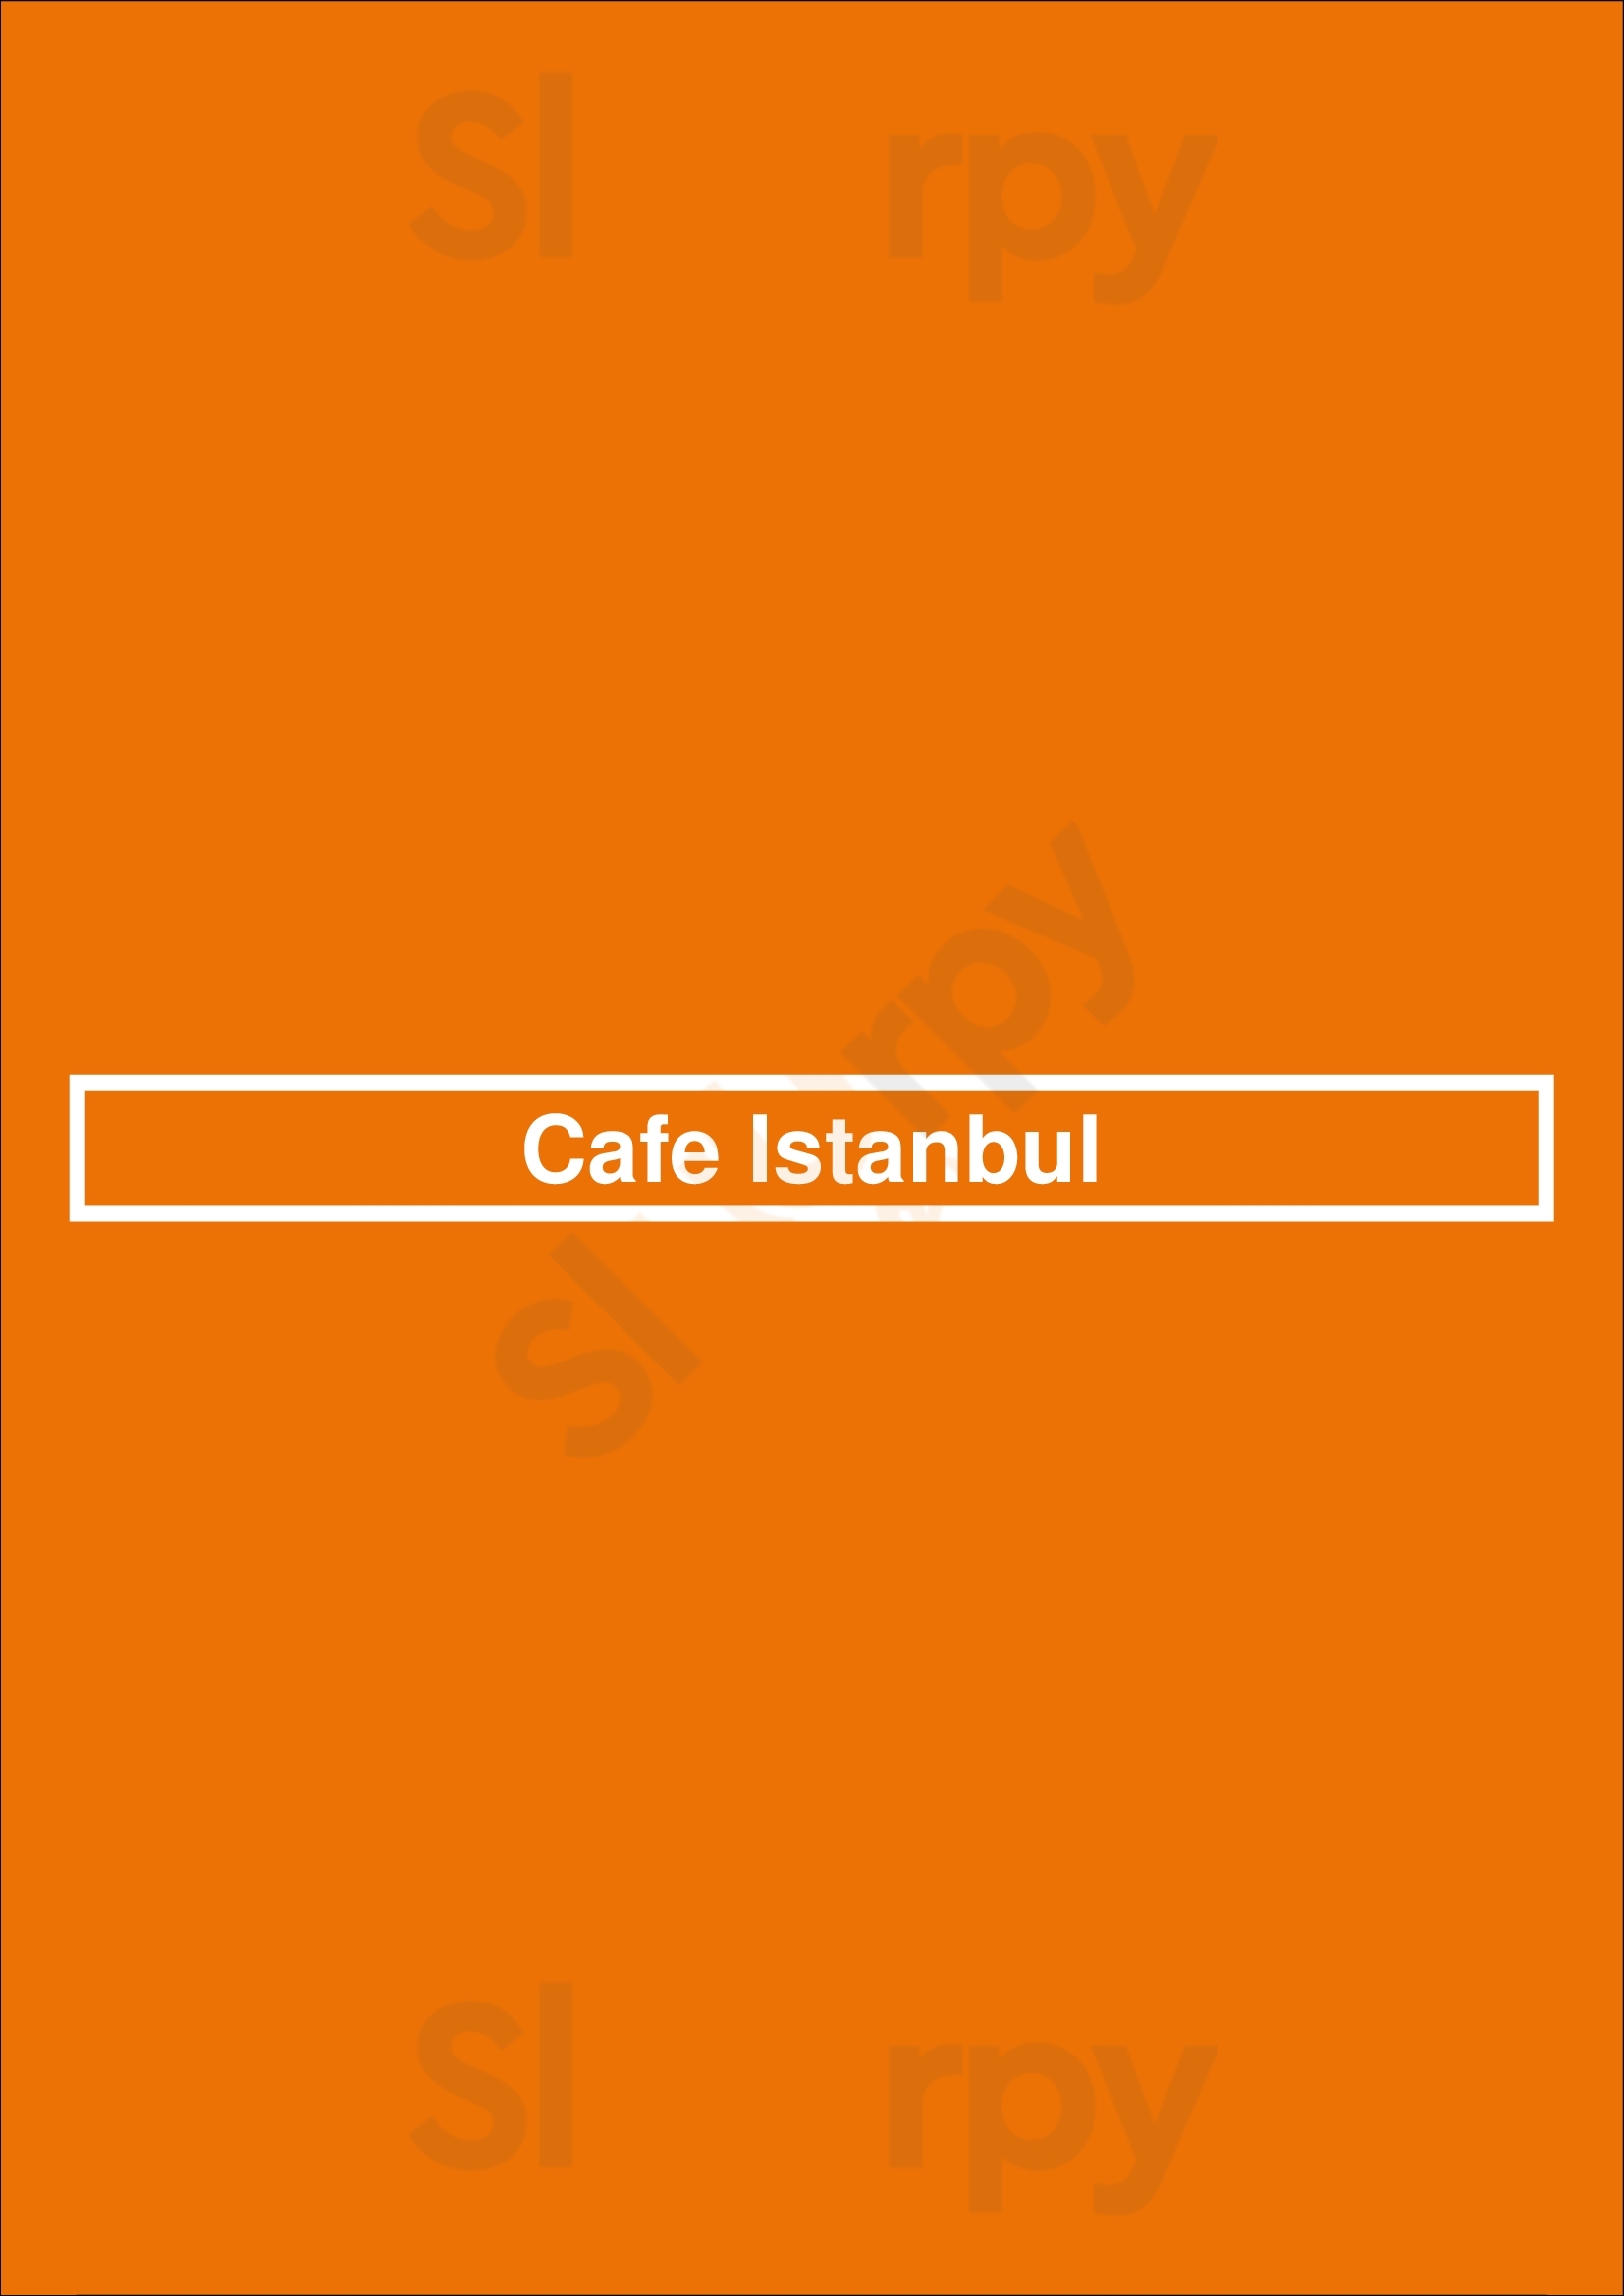 Cafe Istanbul Chicago Menu - 1